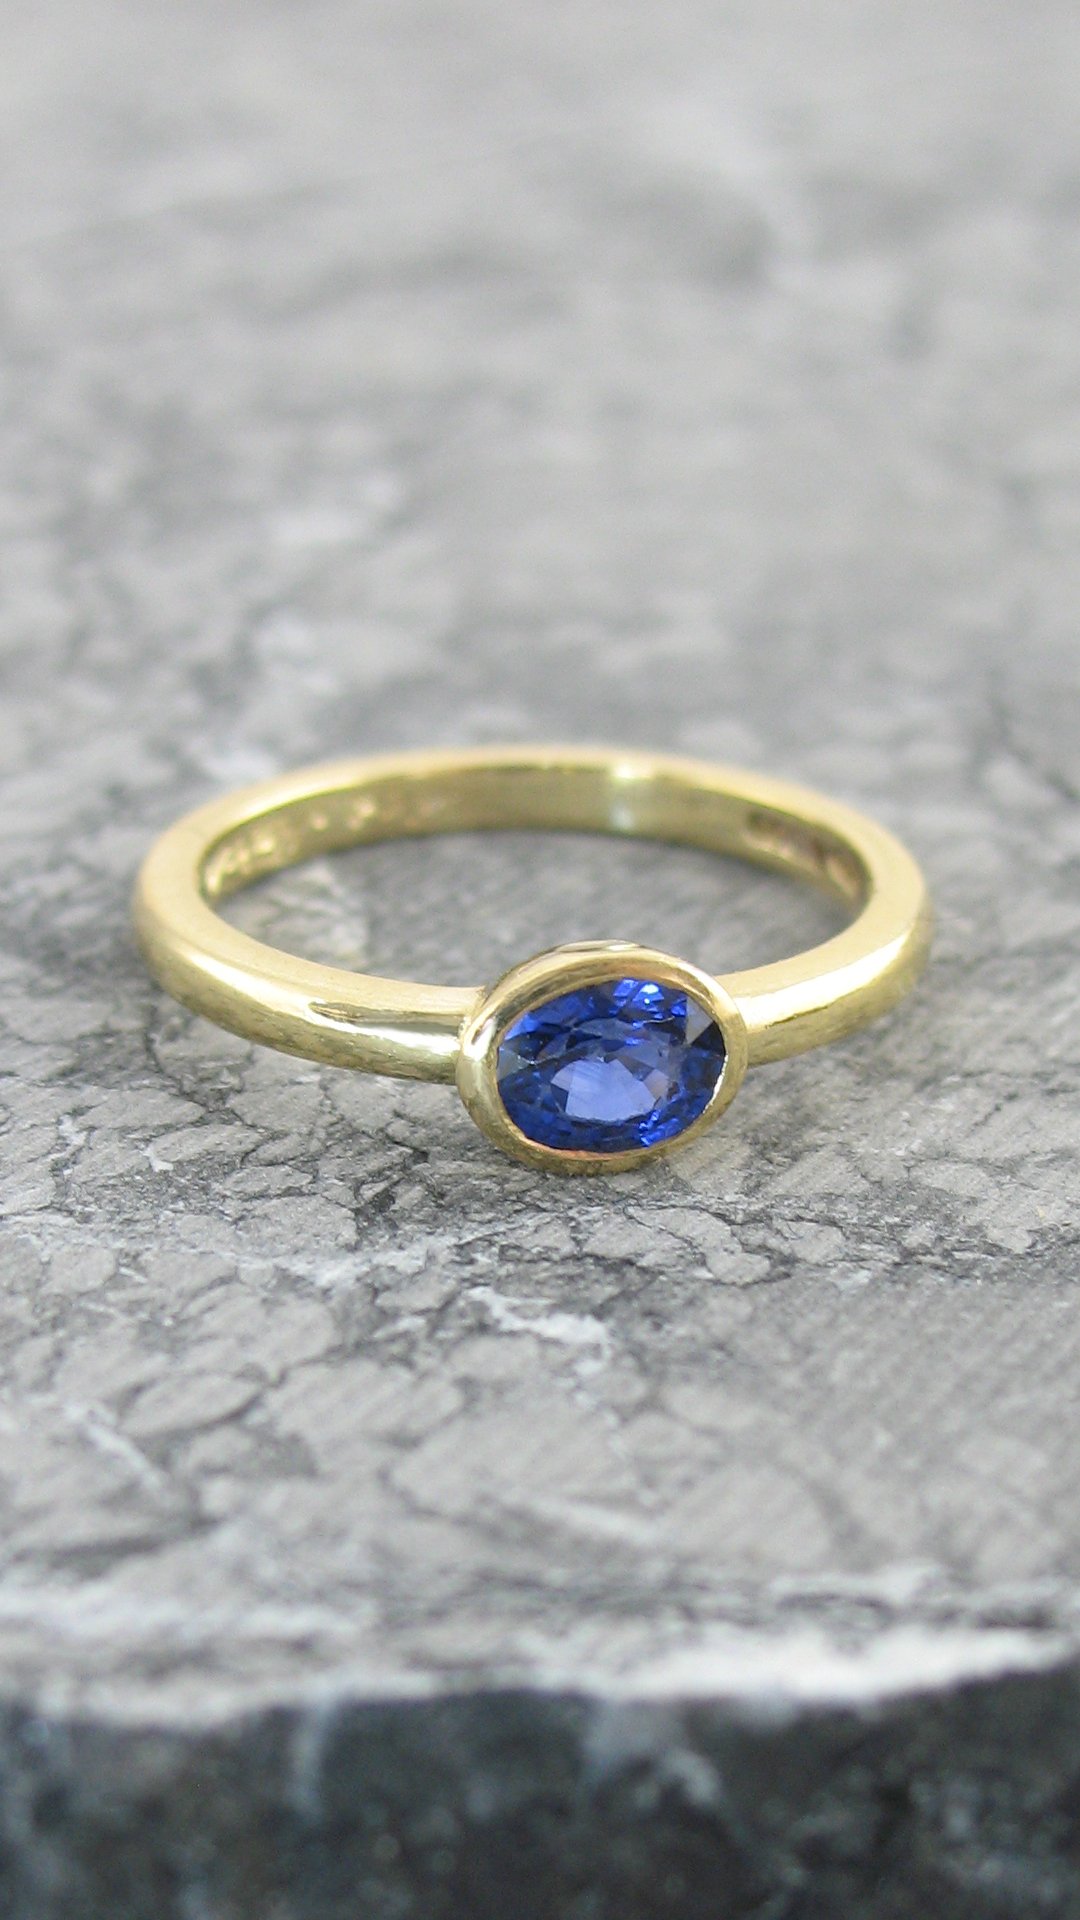 A beautiful bezel set oval sapphire ring 